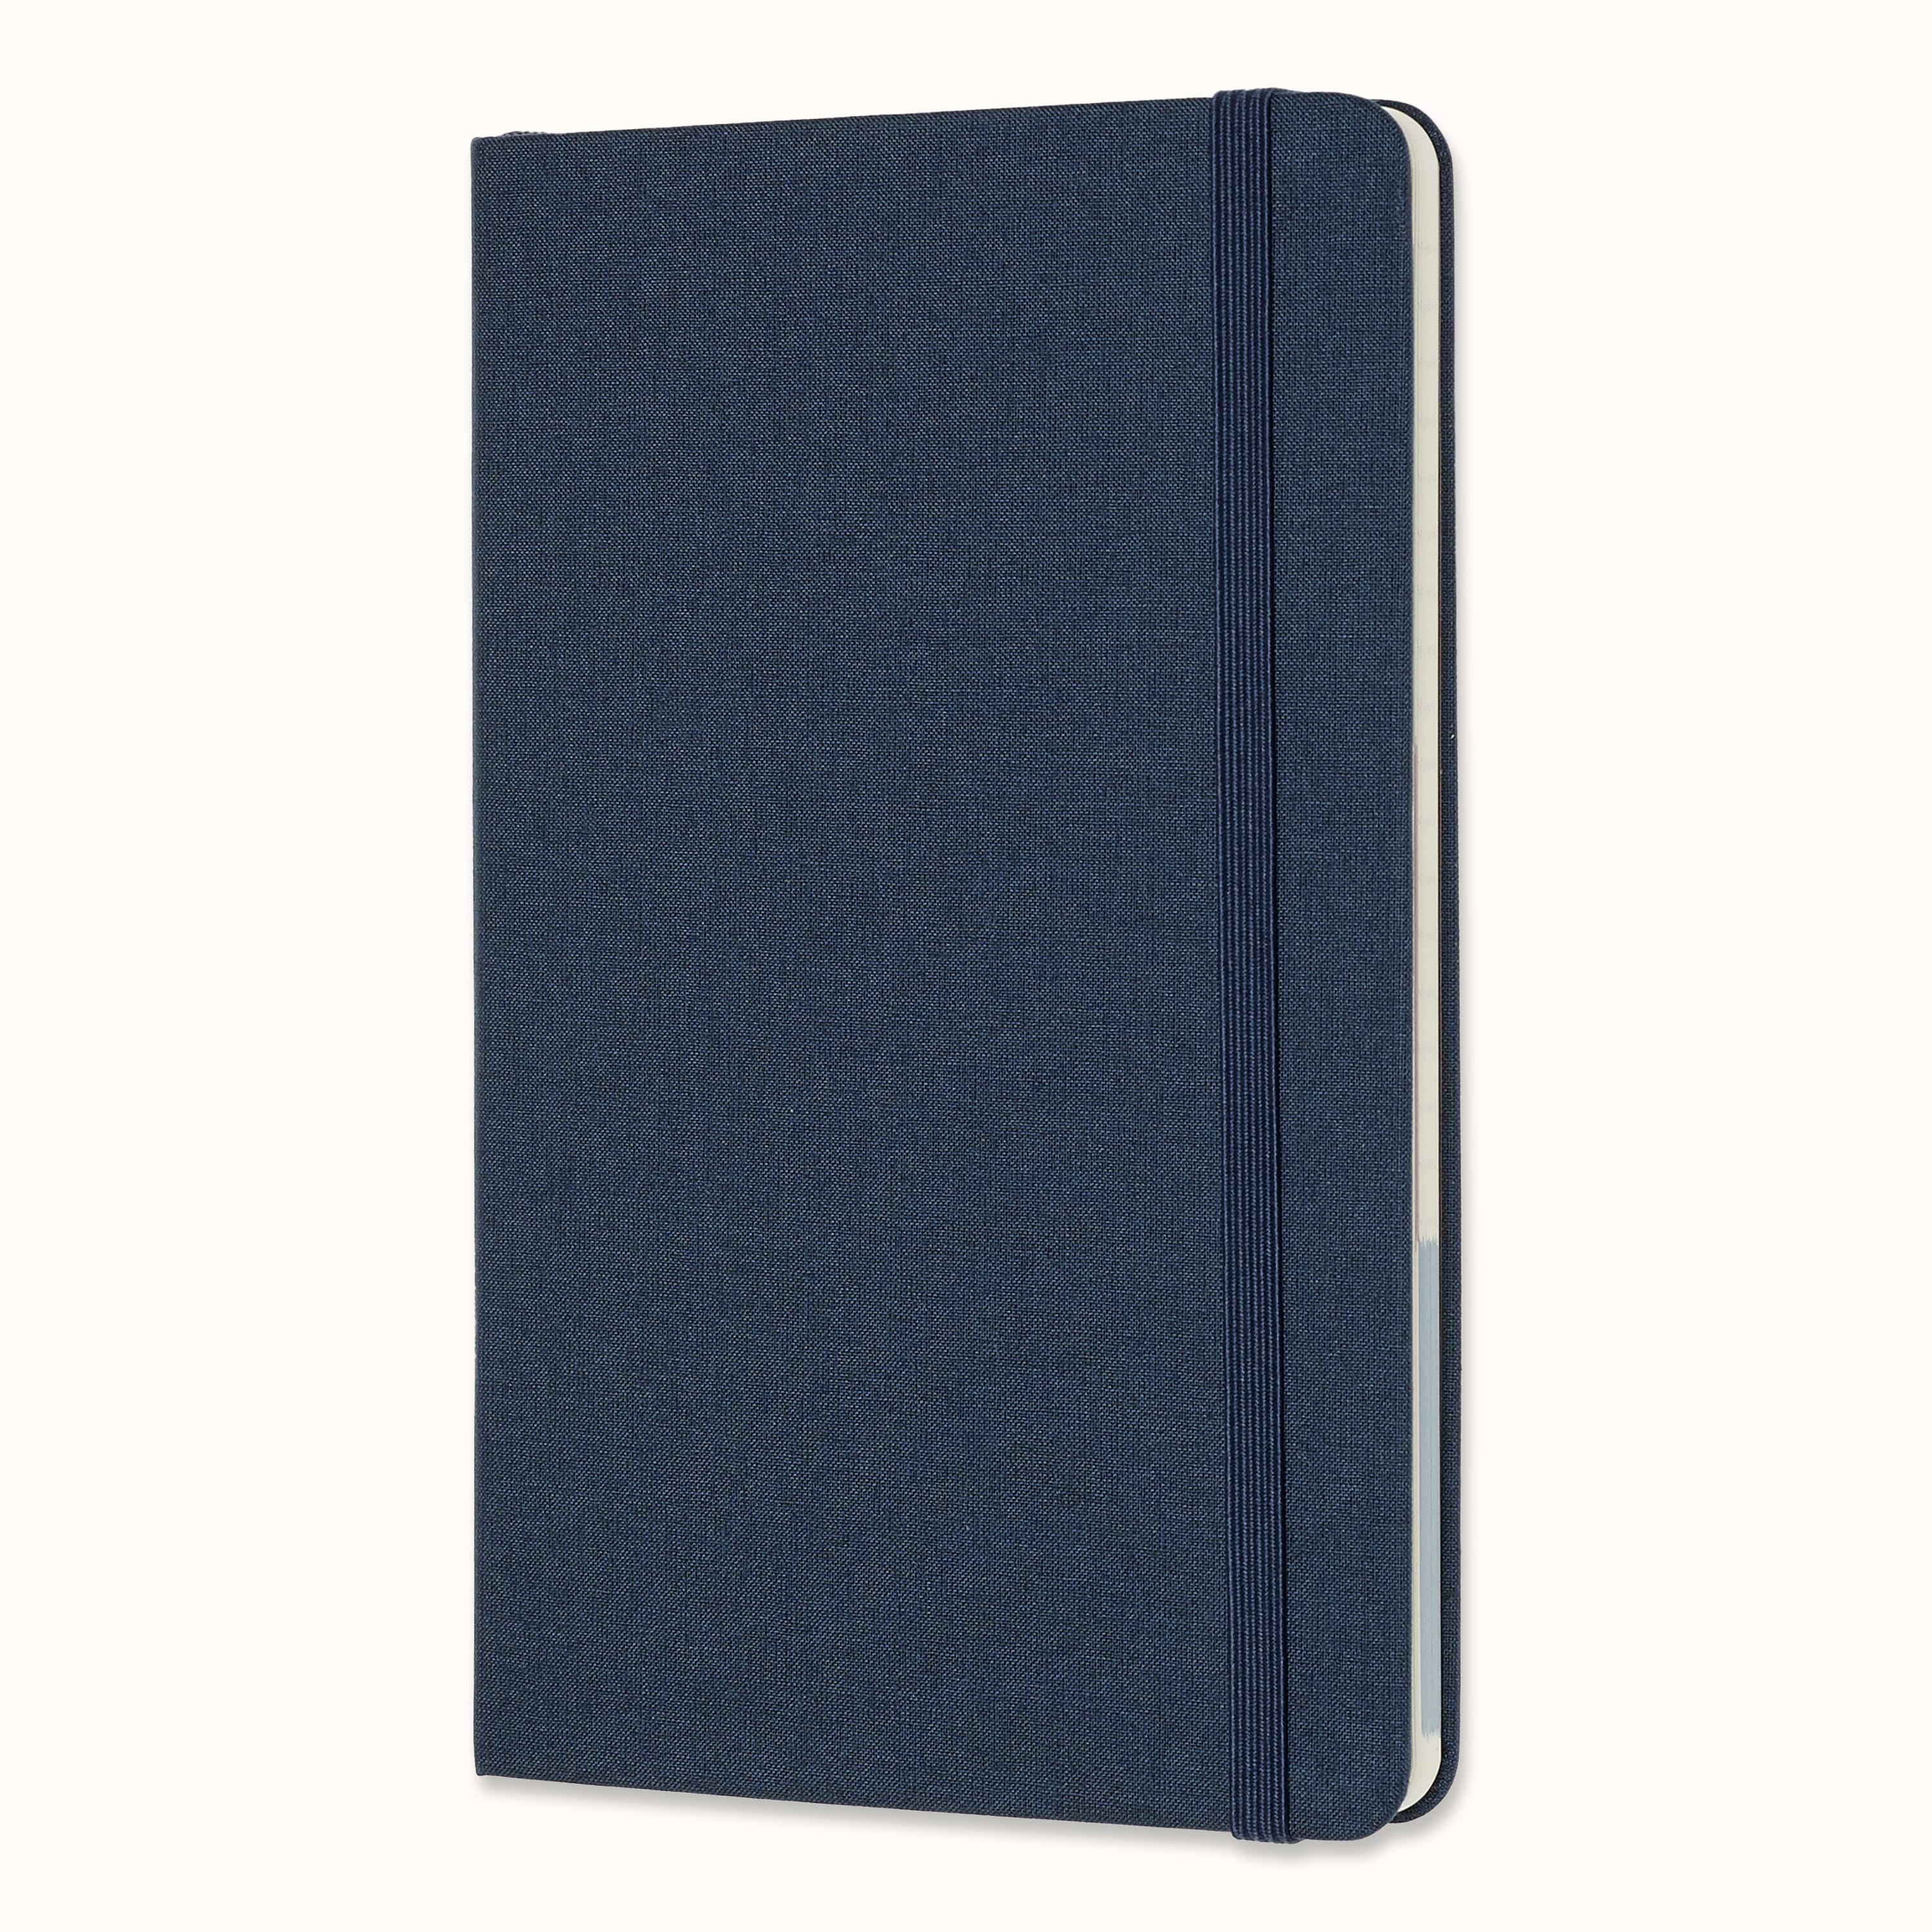  Moleskine Voyageur Notebook, Hard Cover, Medium (4.5